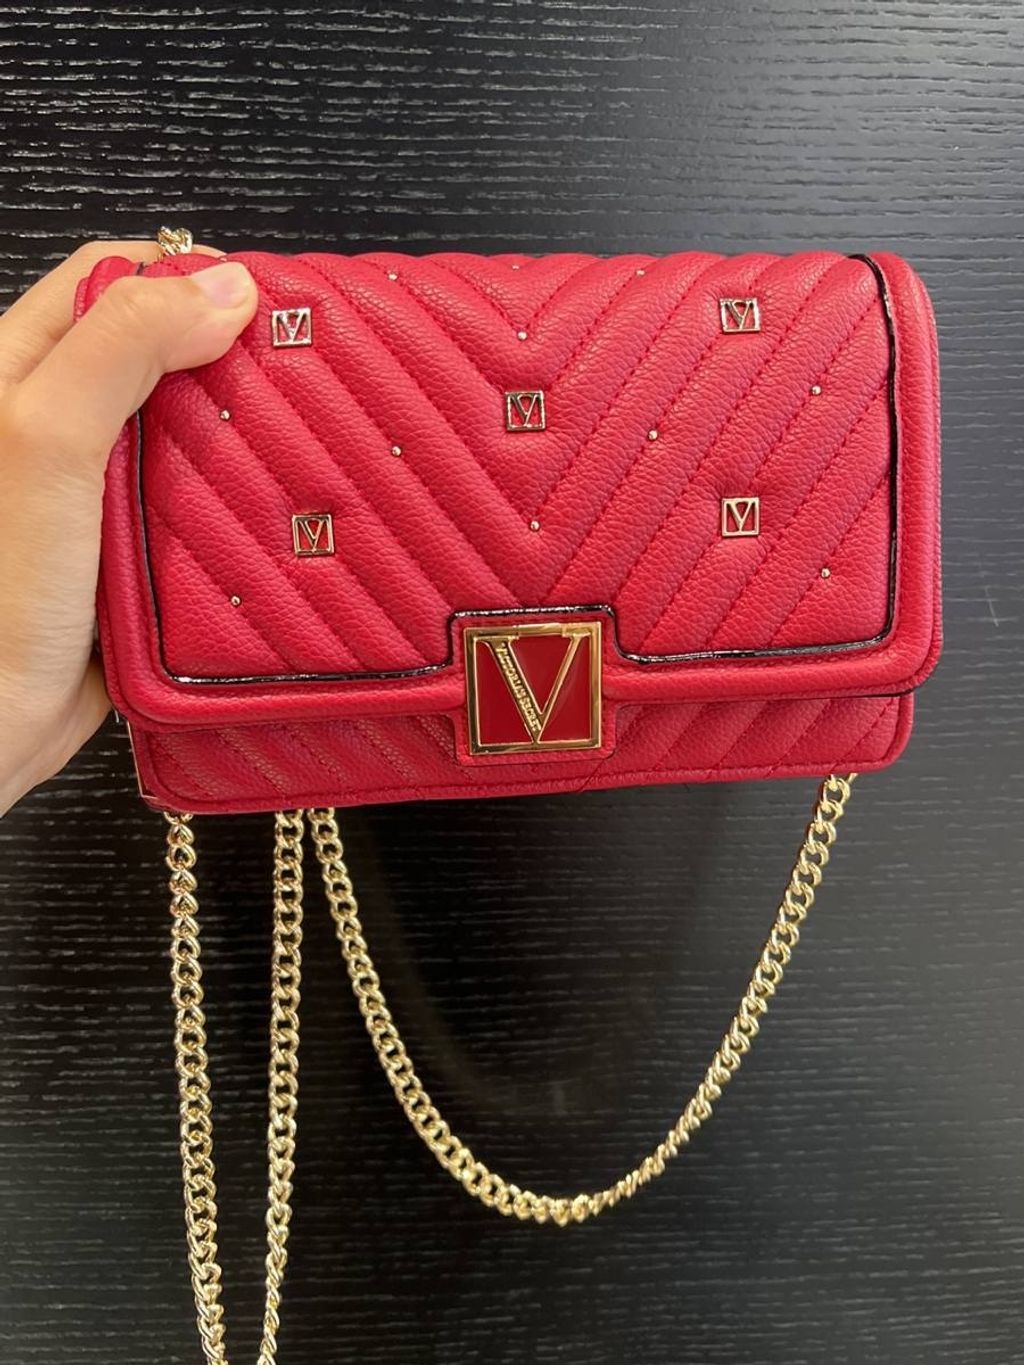 Victoria's Secret V-Quilt Small Bond Street Shoulder Bag - Berry Red –  Beautyspot